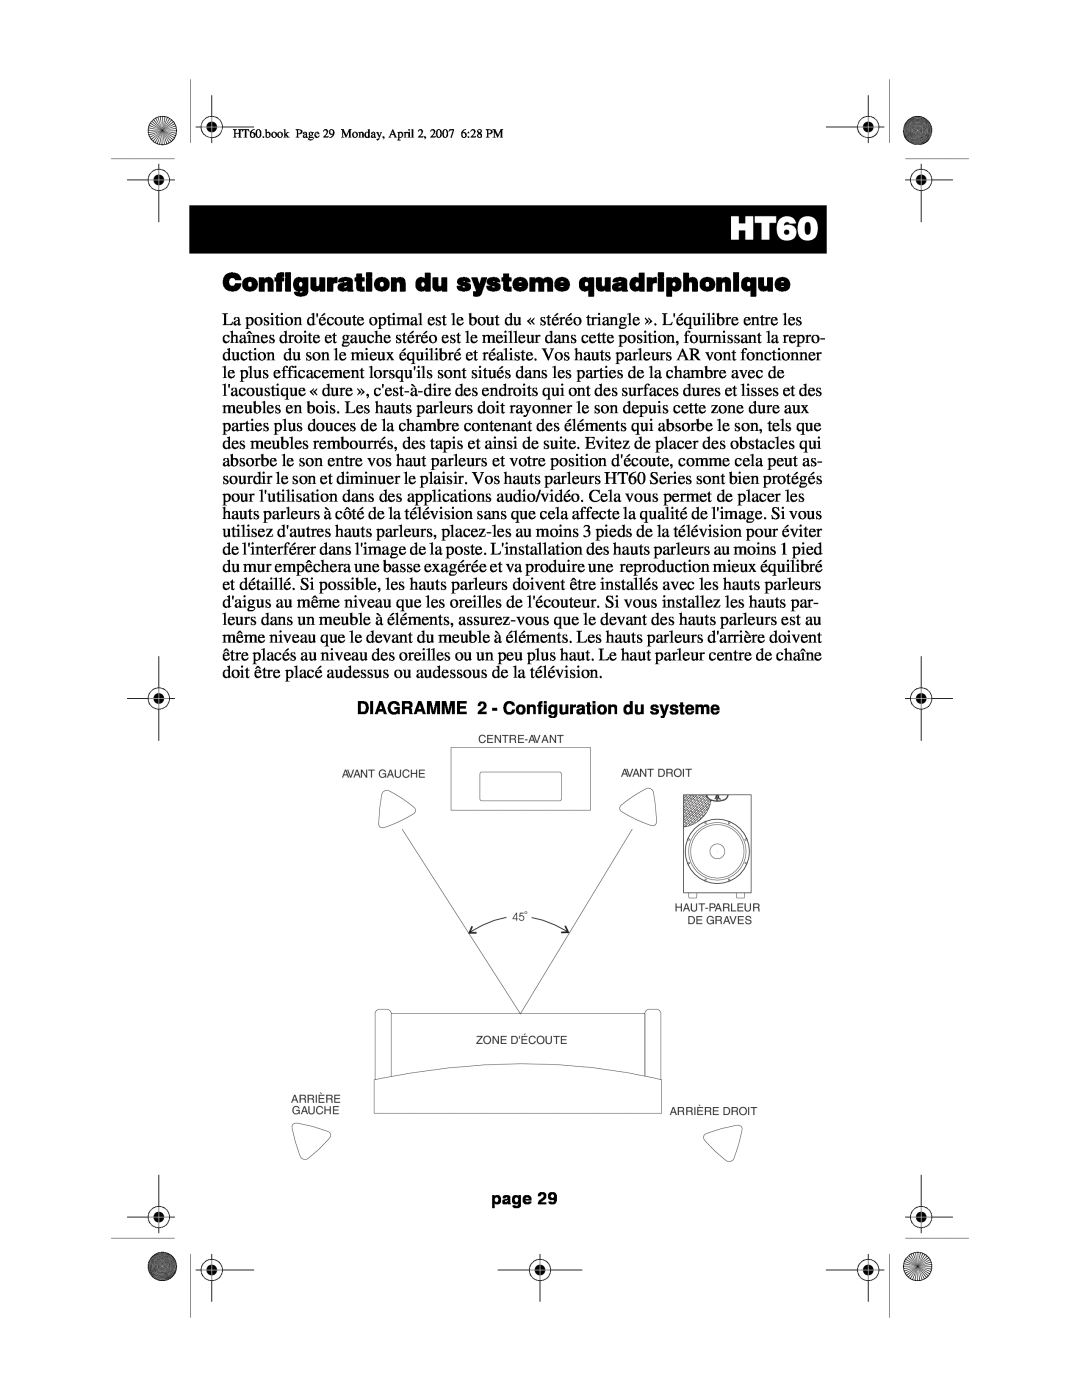 Acoustic Research HT60 Configuration du systeme quadriphonique, DIAGRAMME 2 - Configuration du systeme, page 